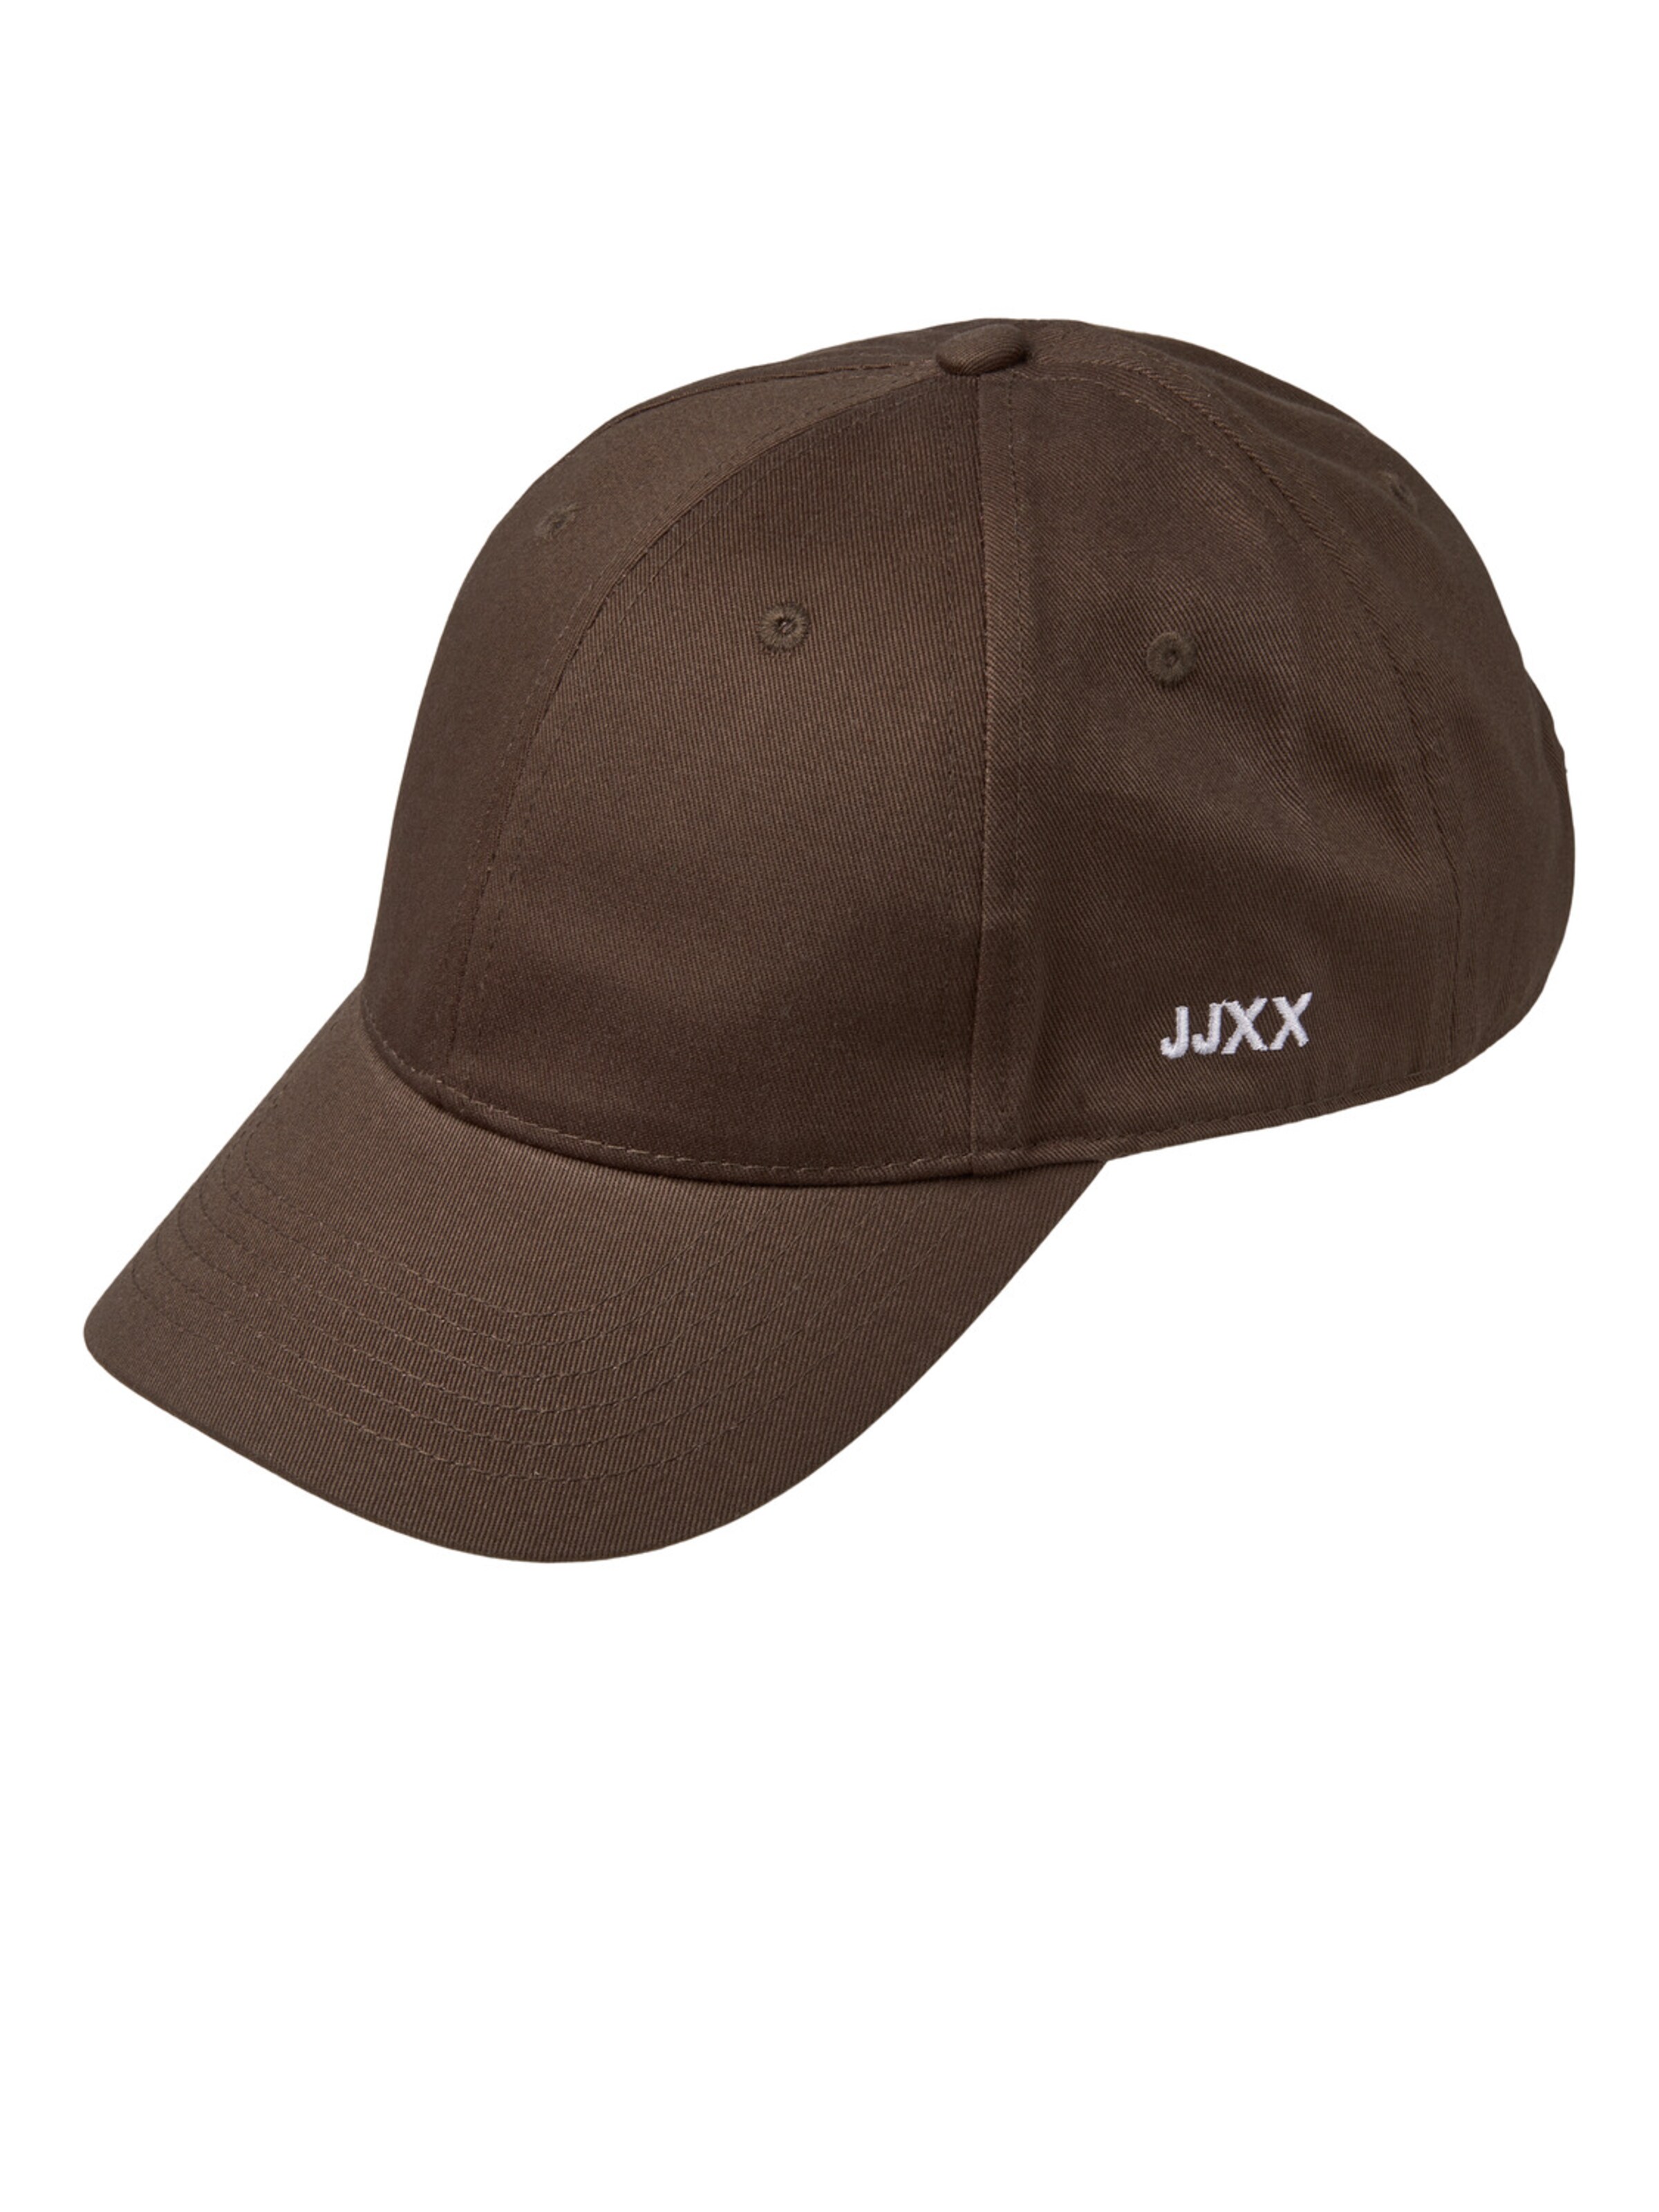 Jjxx Casquette 55-60 Marron